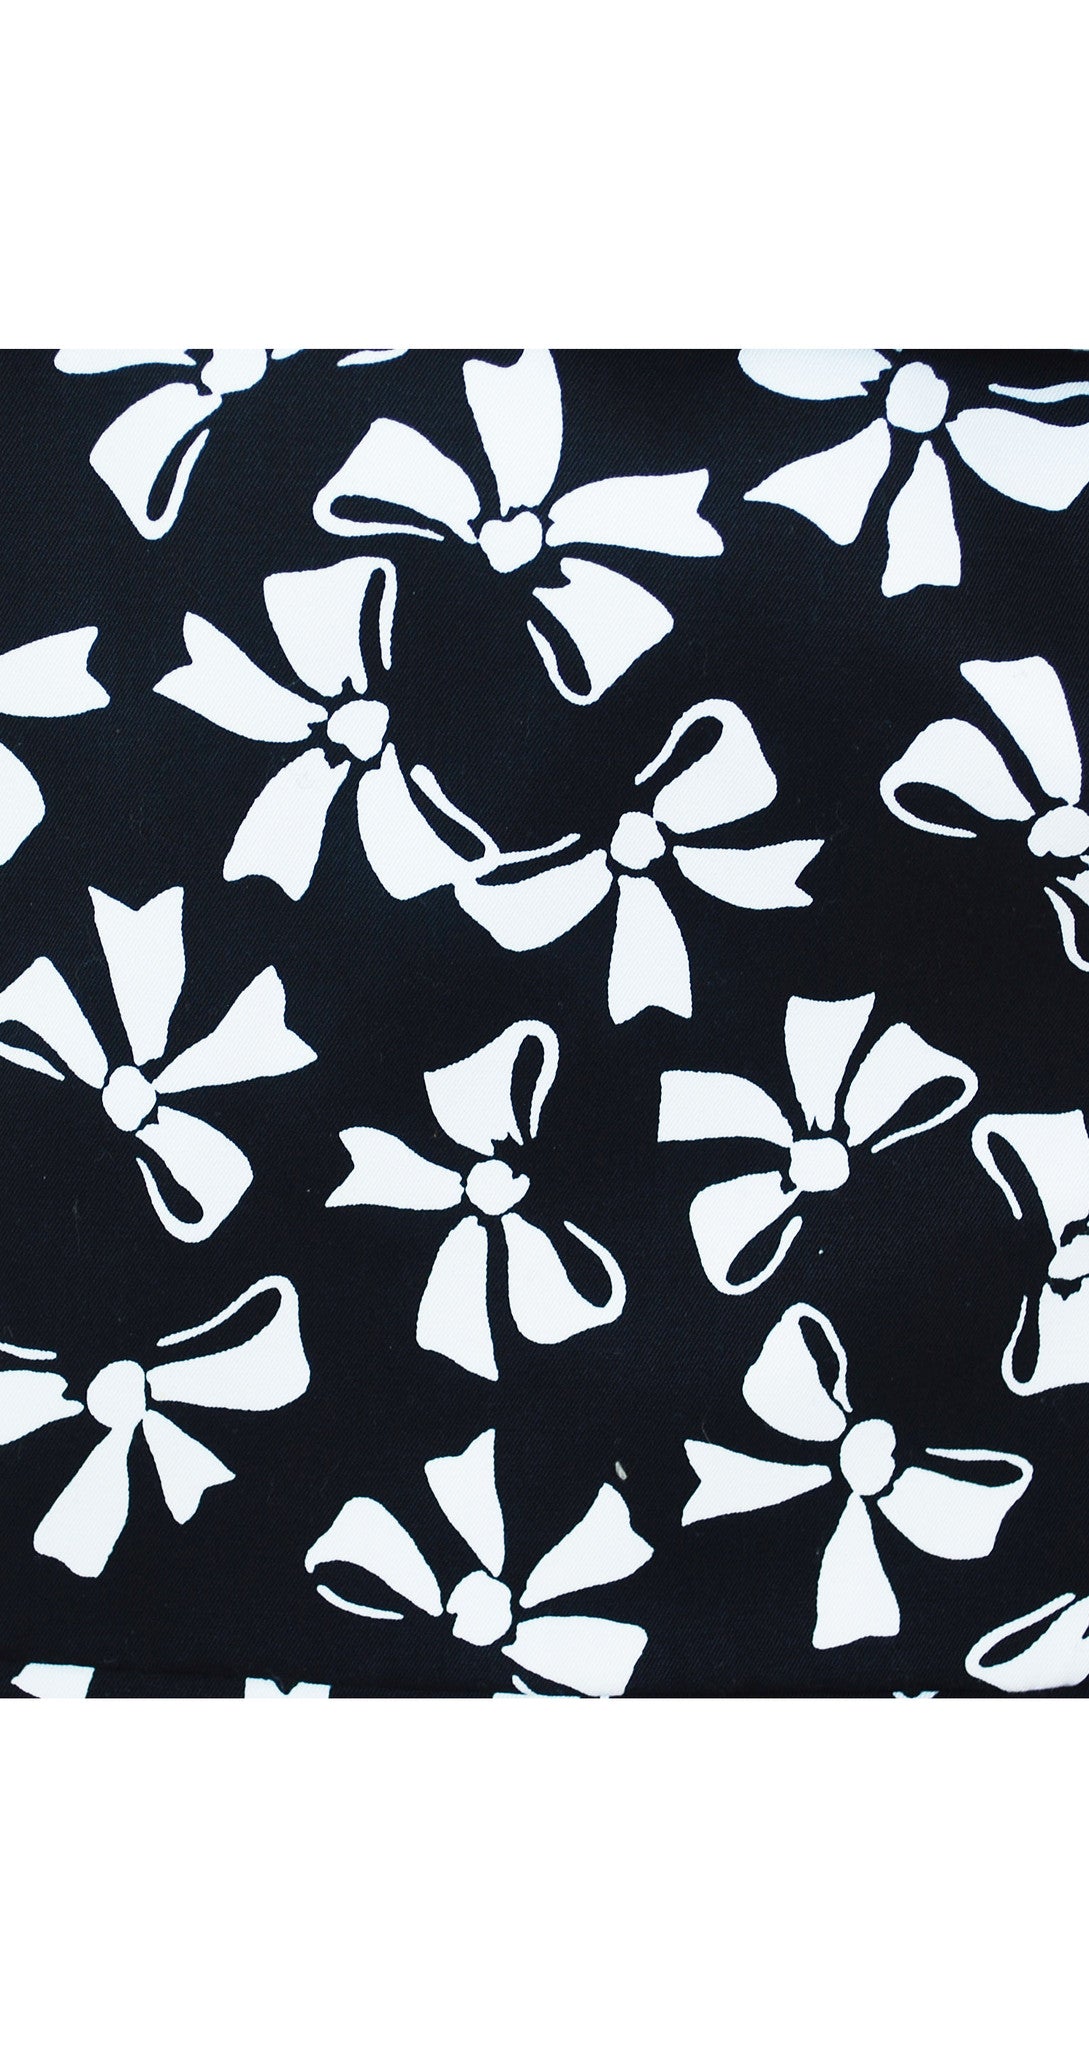 1987 S/S Documented Bow Print Black & White Cotton Strapless Dress